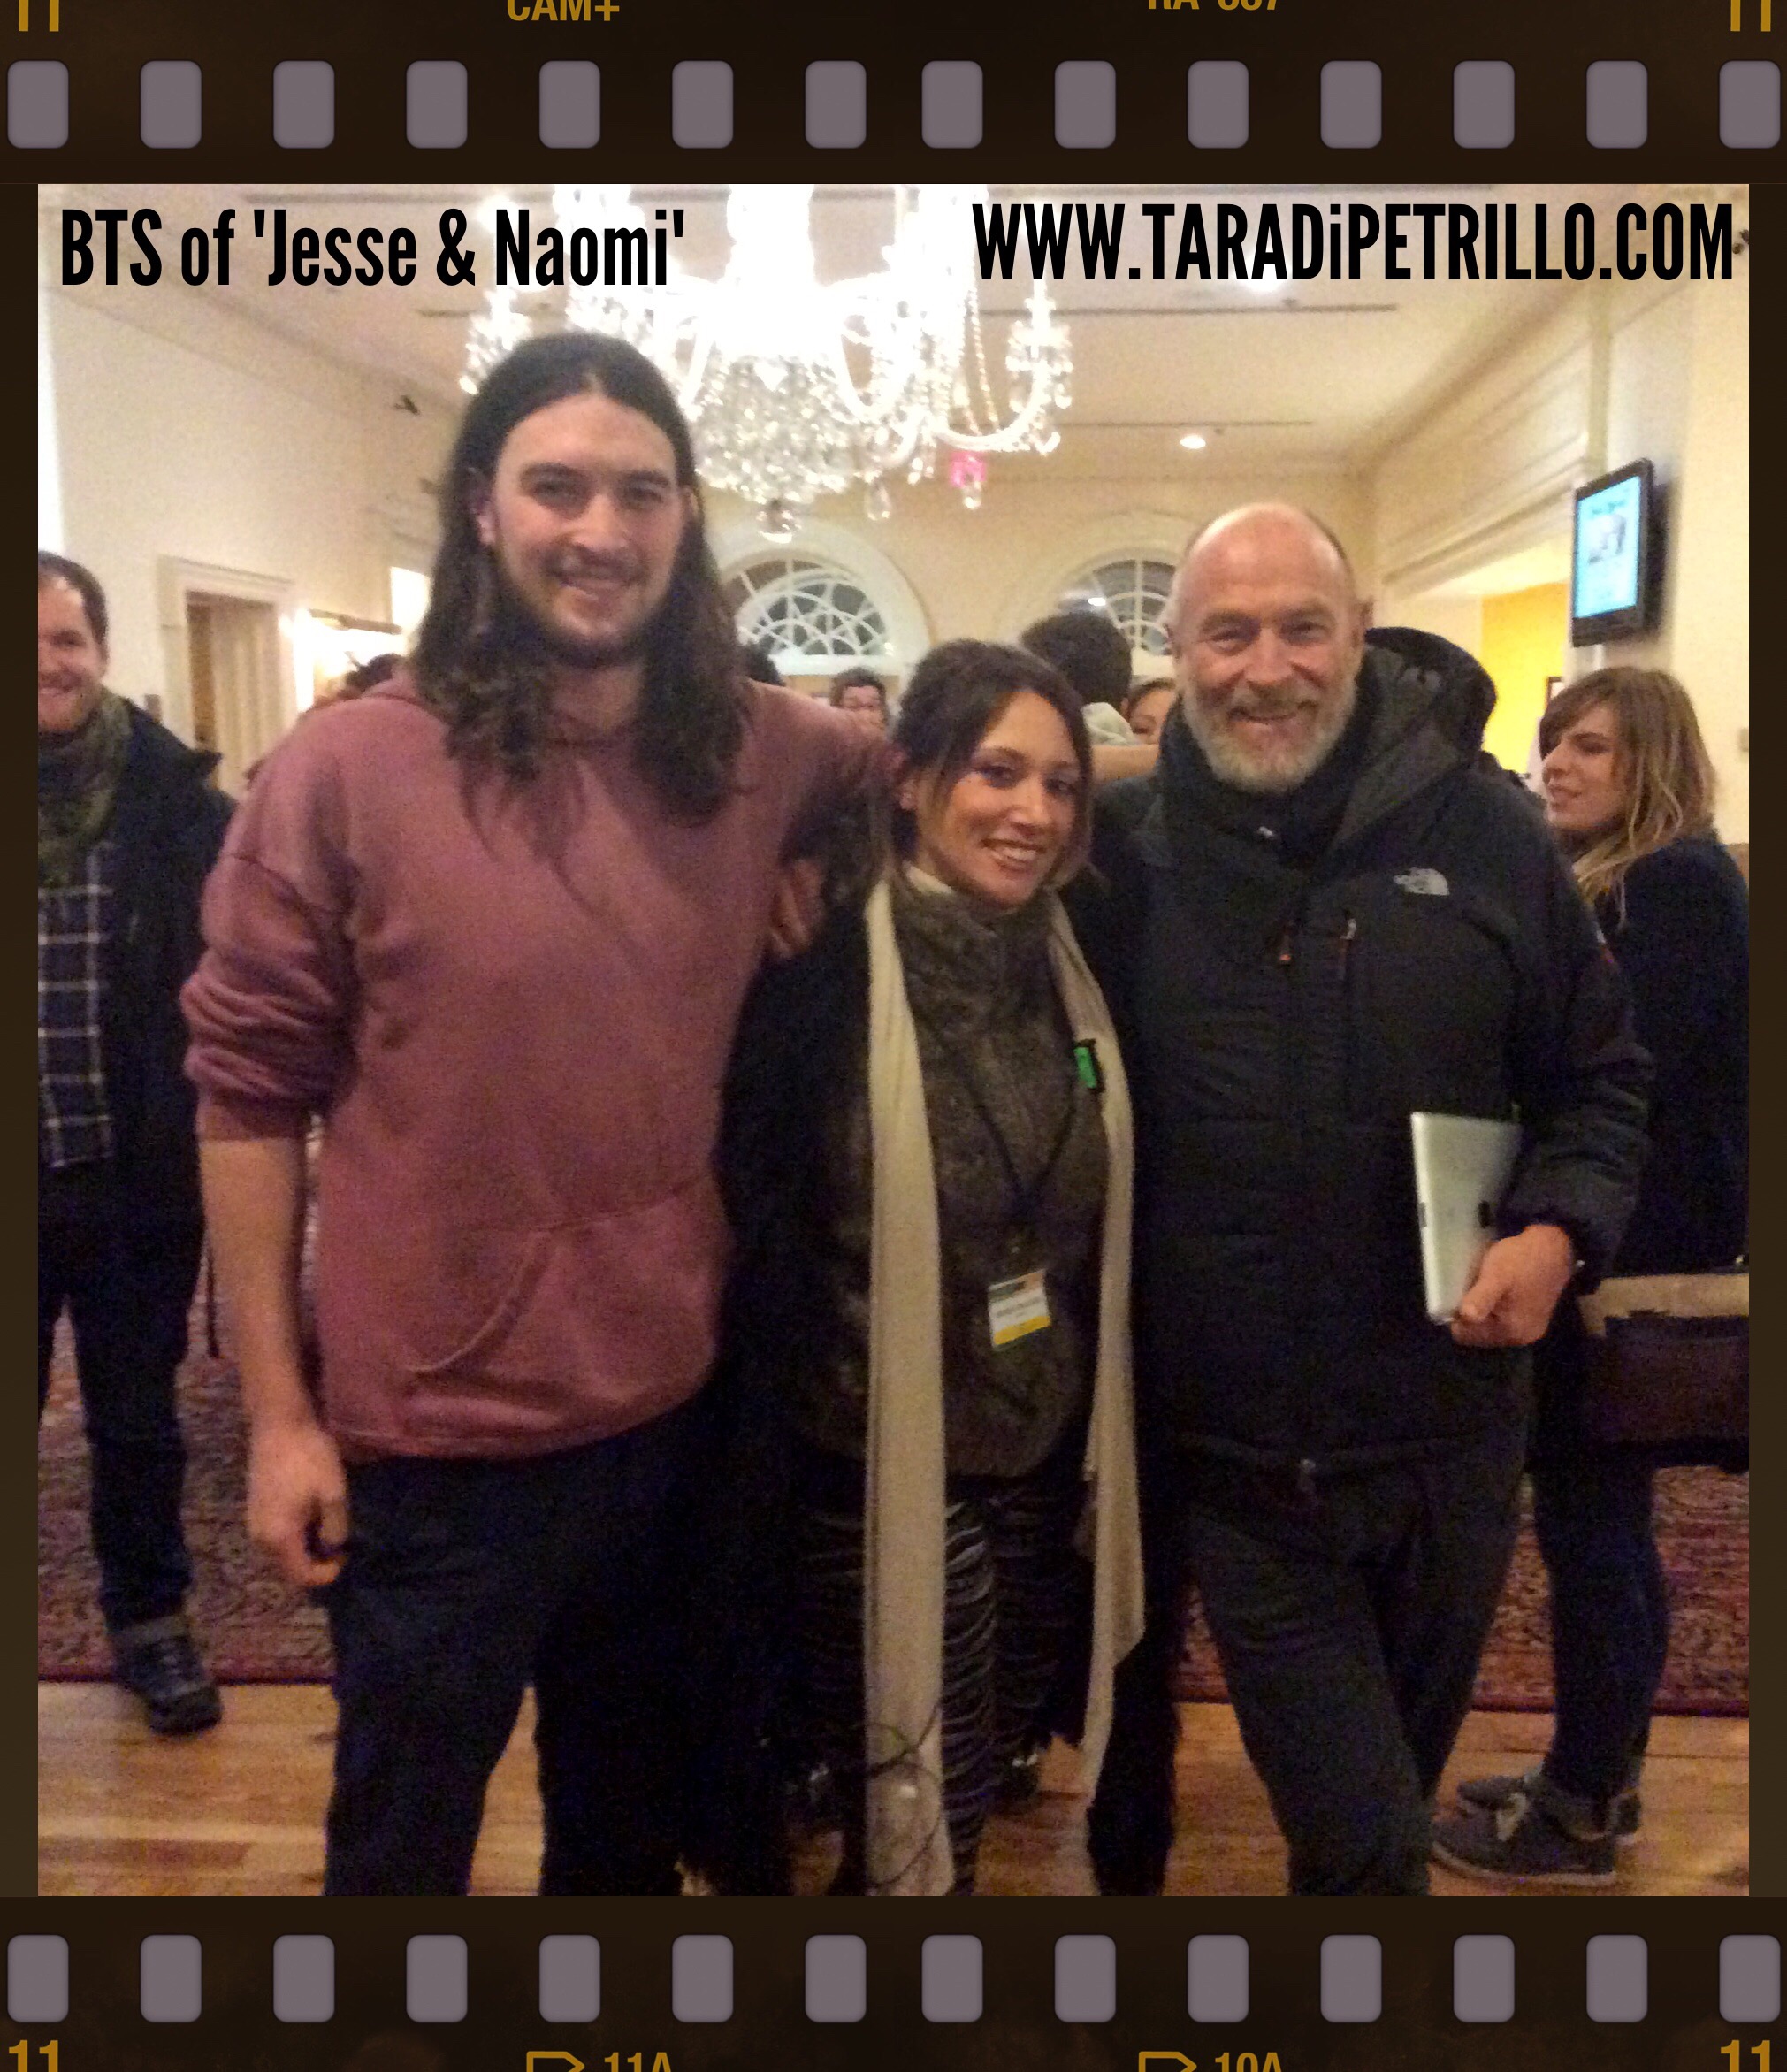 Tara DiPetrillo with Angus Bernsen & Corbin Bernsen on the set of Jesse and Naomi.